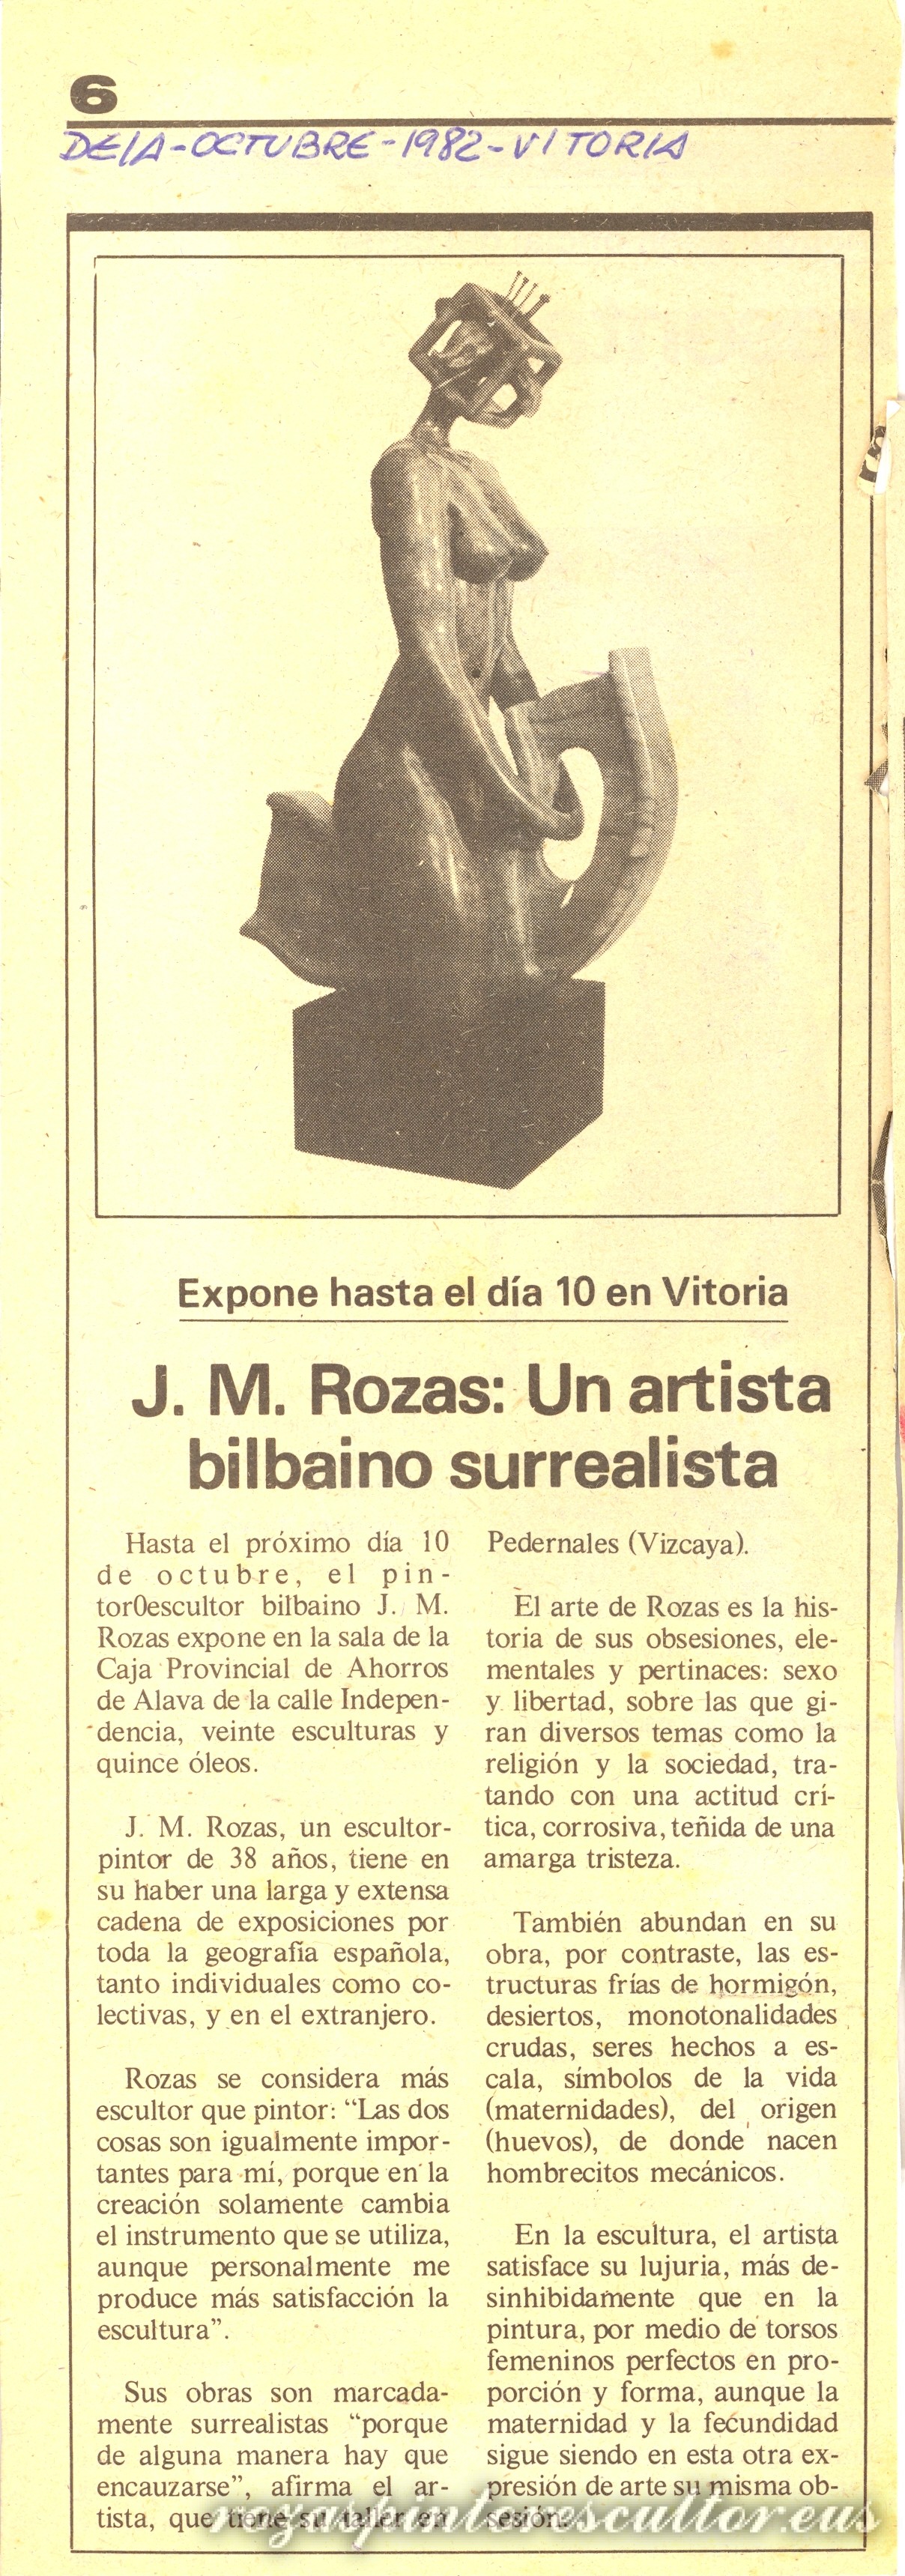 1982 Deia – J.M. Rozas: Artista bilbotar surrealista